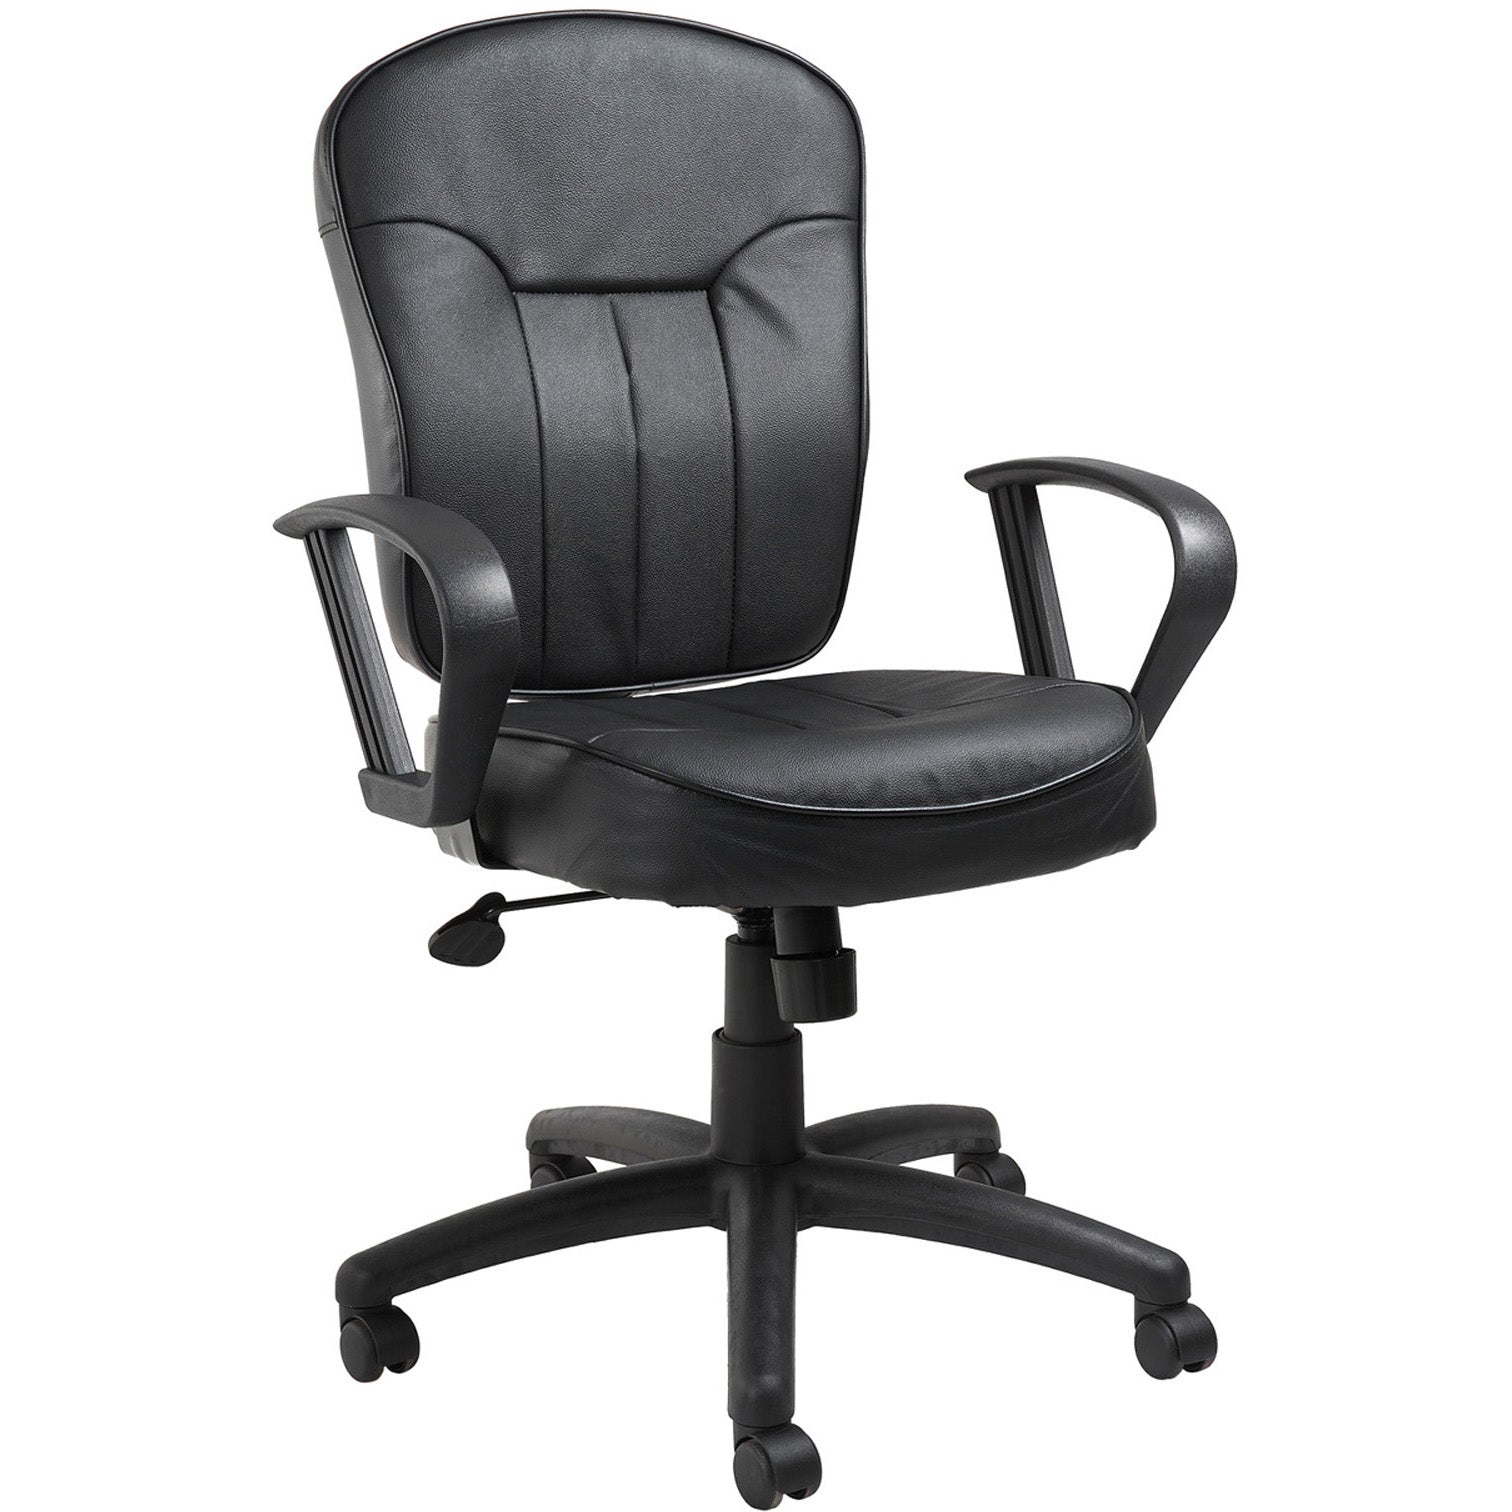 LeatherPlus Executive Chair, B10101-BK